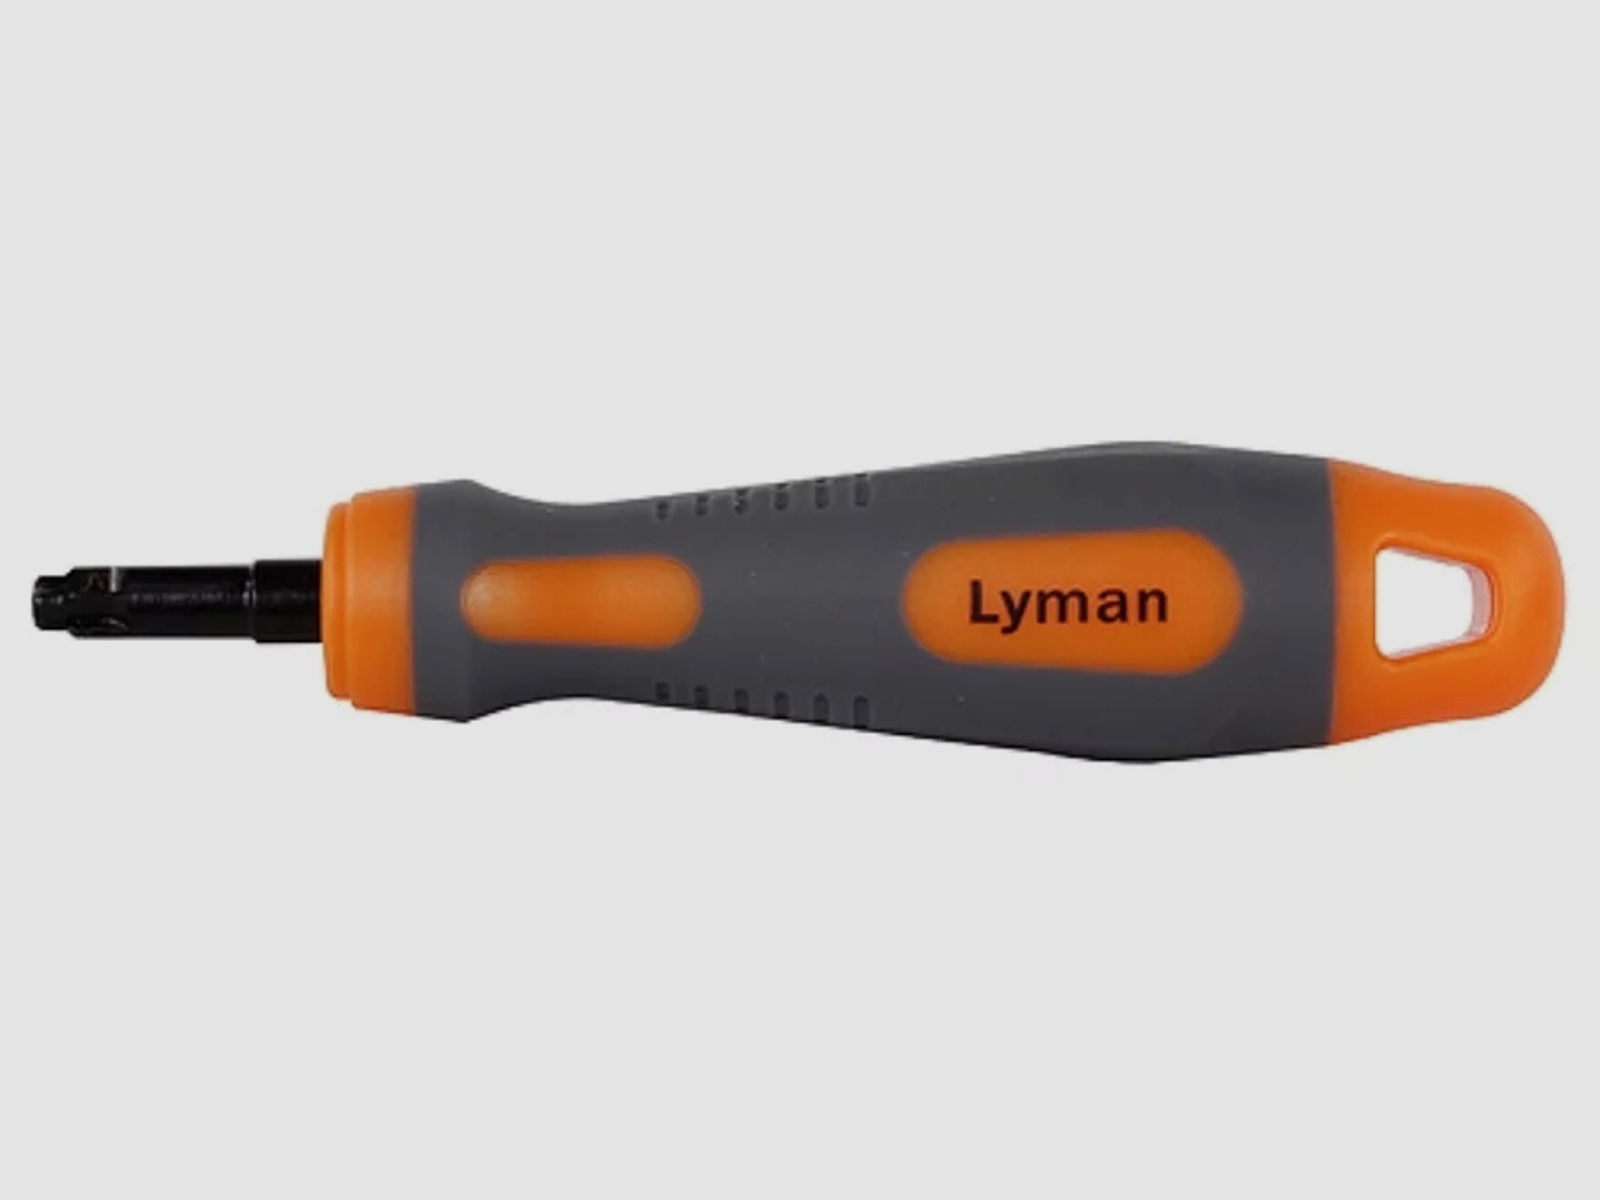 Lyman Primer Pocket Reamer small / Entgrater militärisch mit Handgriff